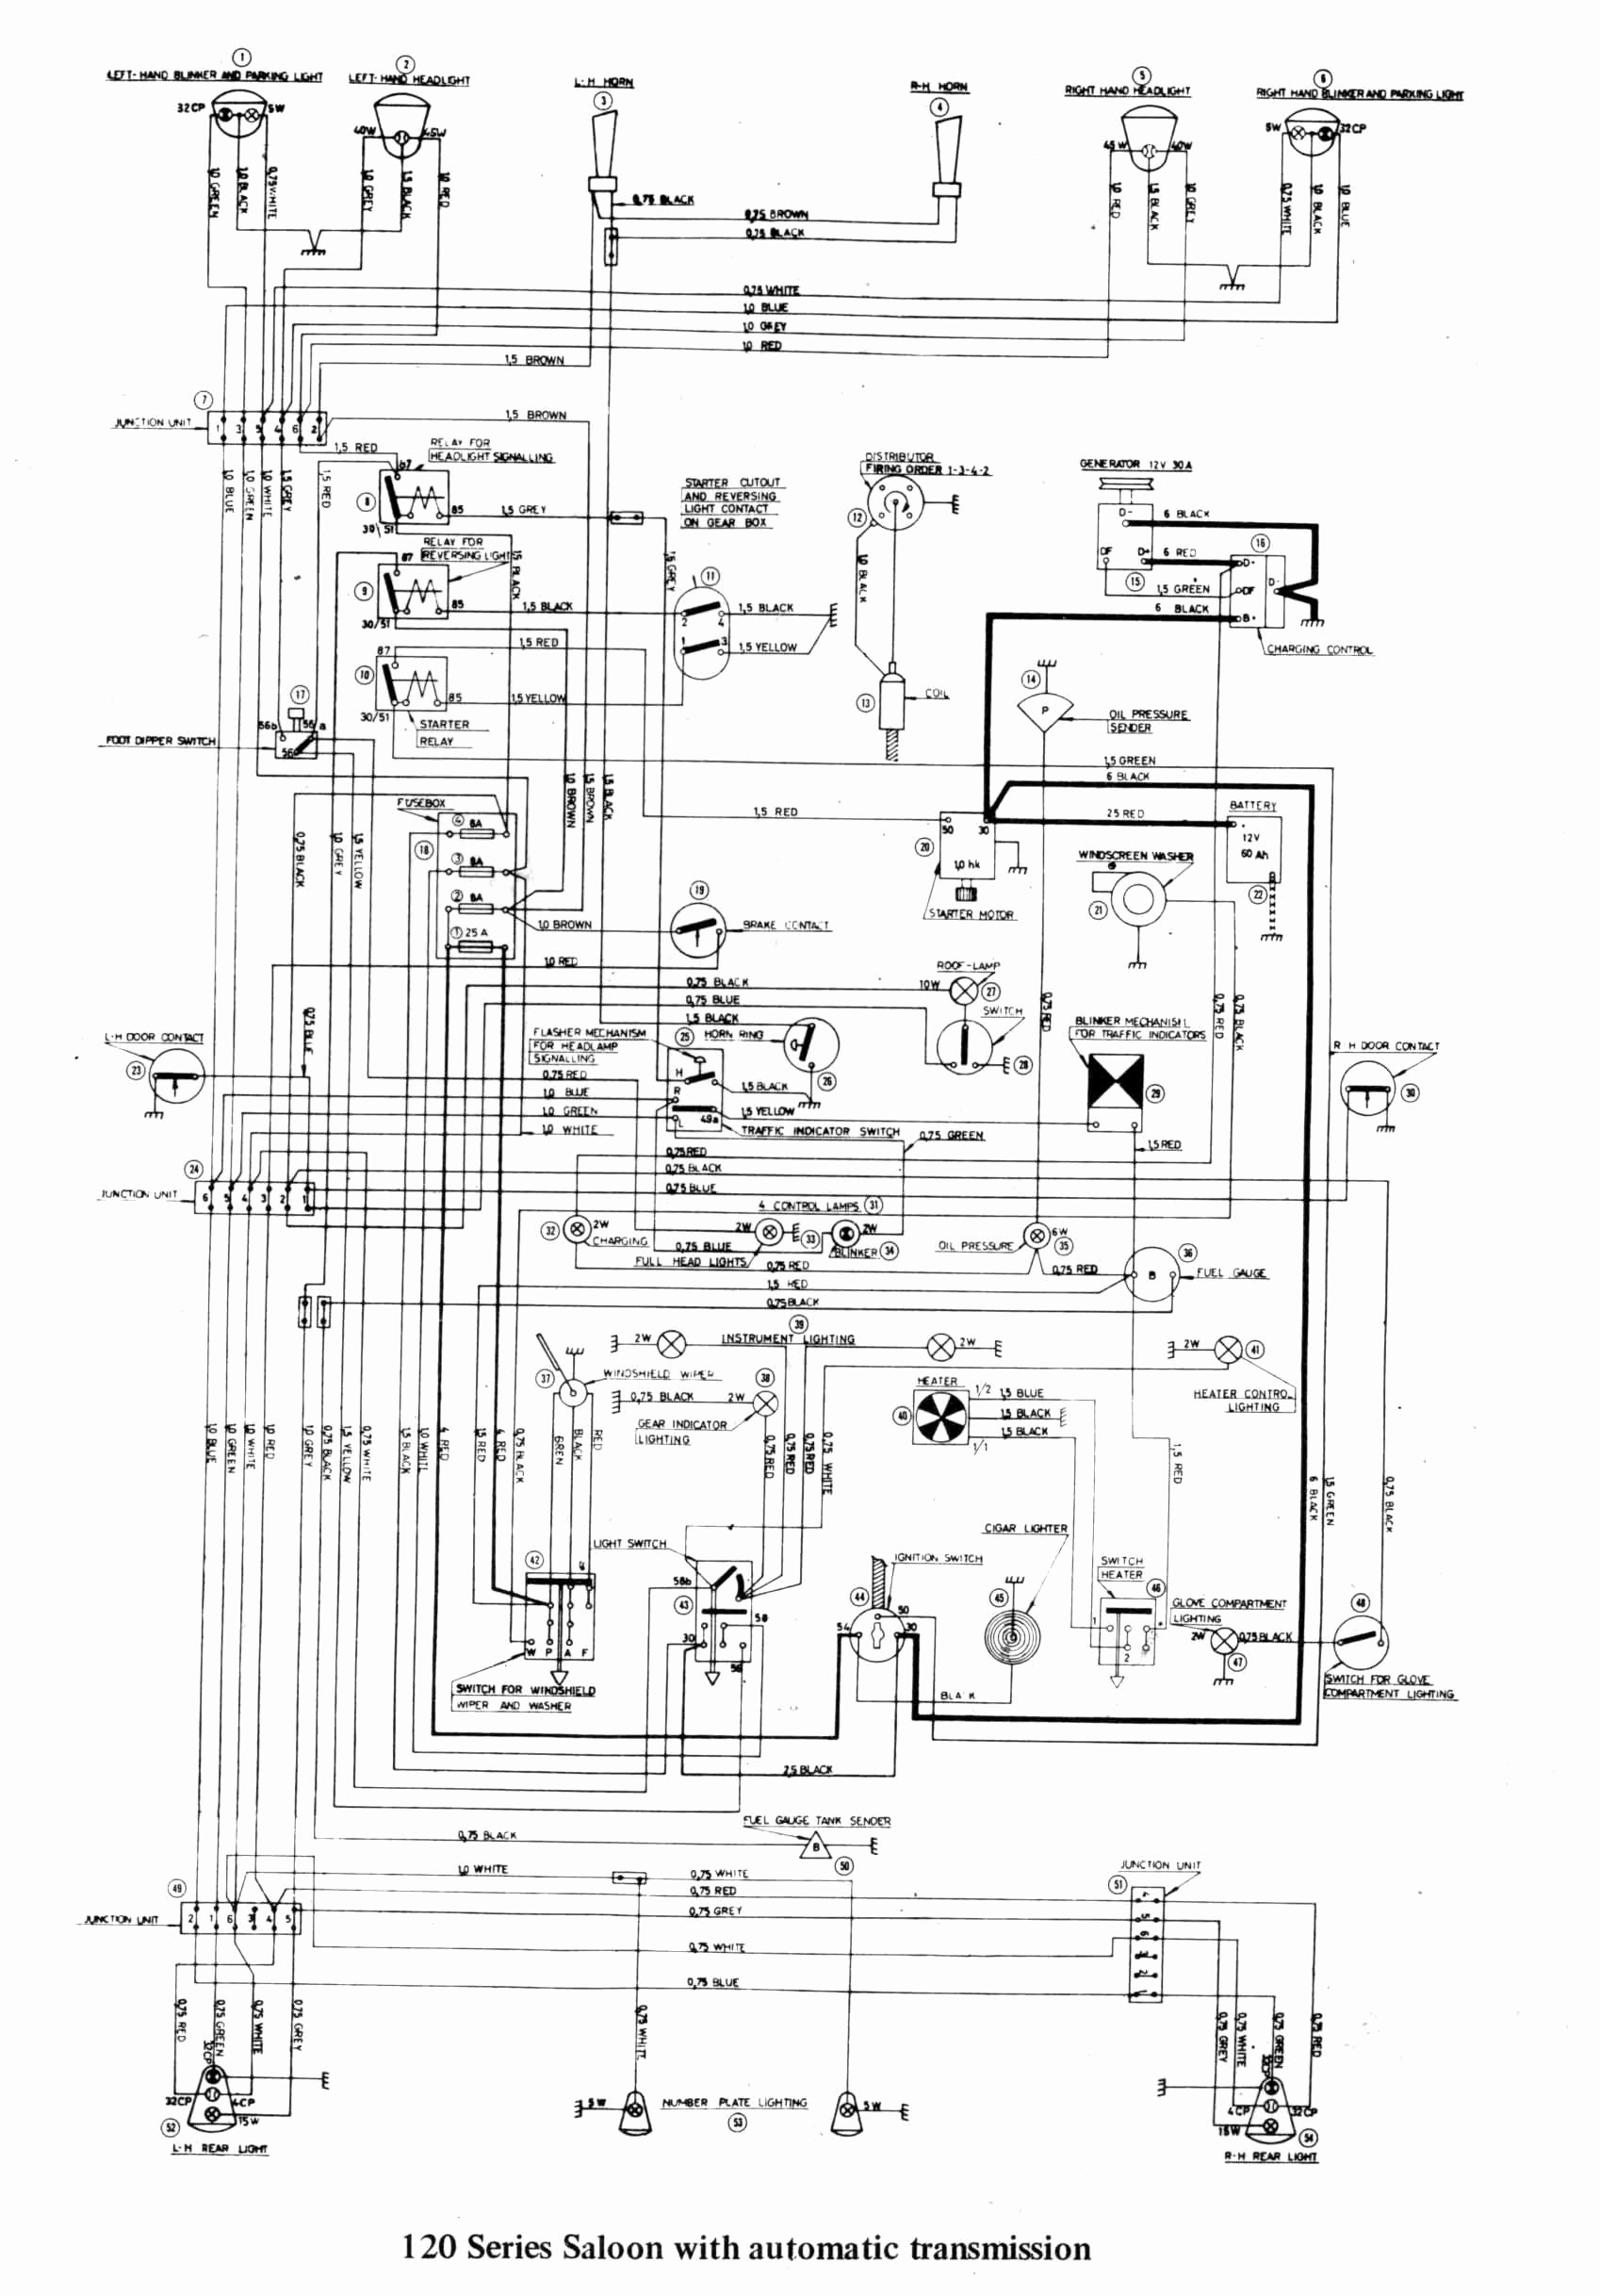 Wiring Diagram Fuel Pump Wiring Diagram Awesome S13 Wiring Diagram